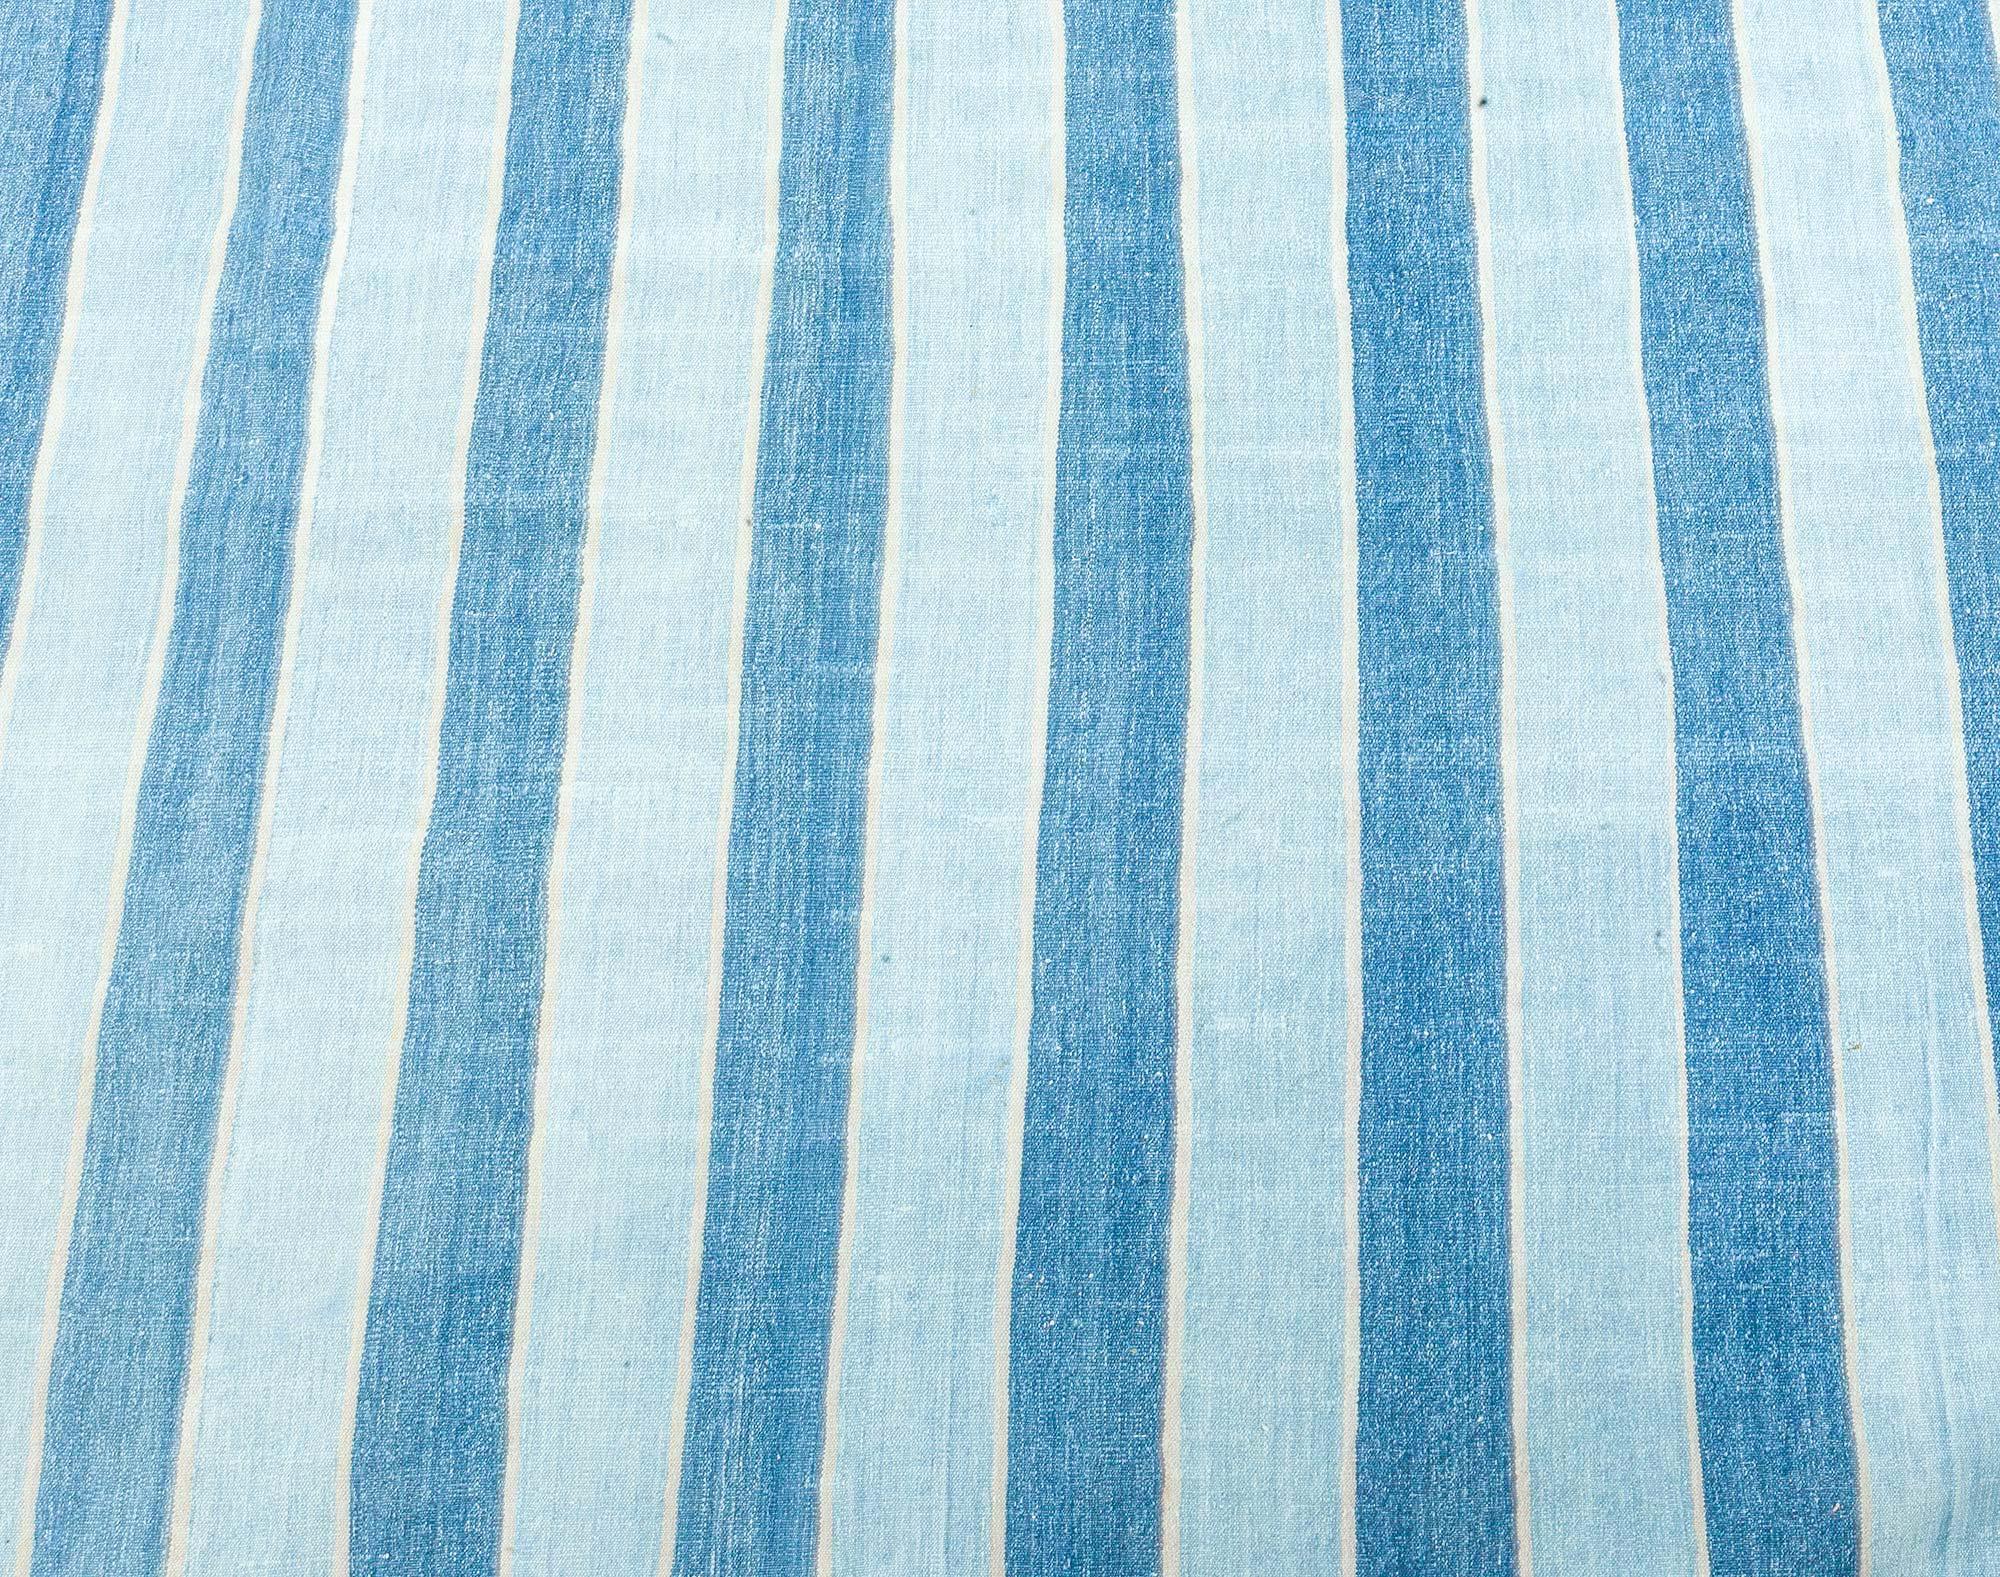 Vintage Indian Dhurrie striped blue rug
Size: 9'4